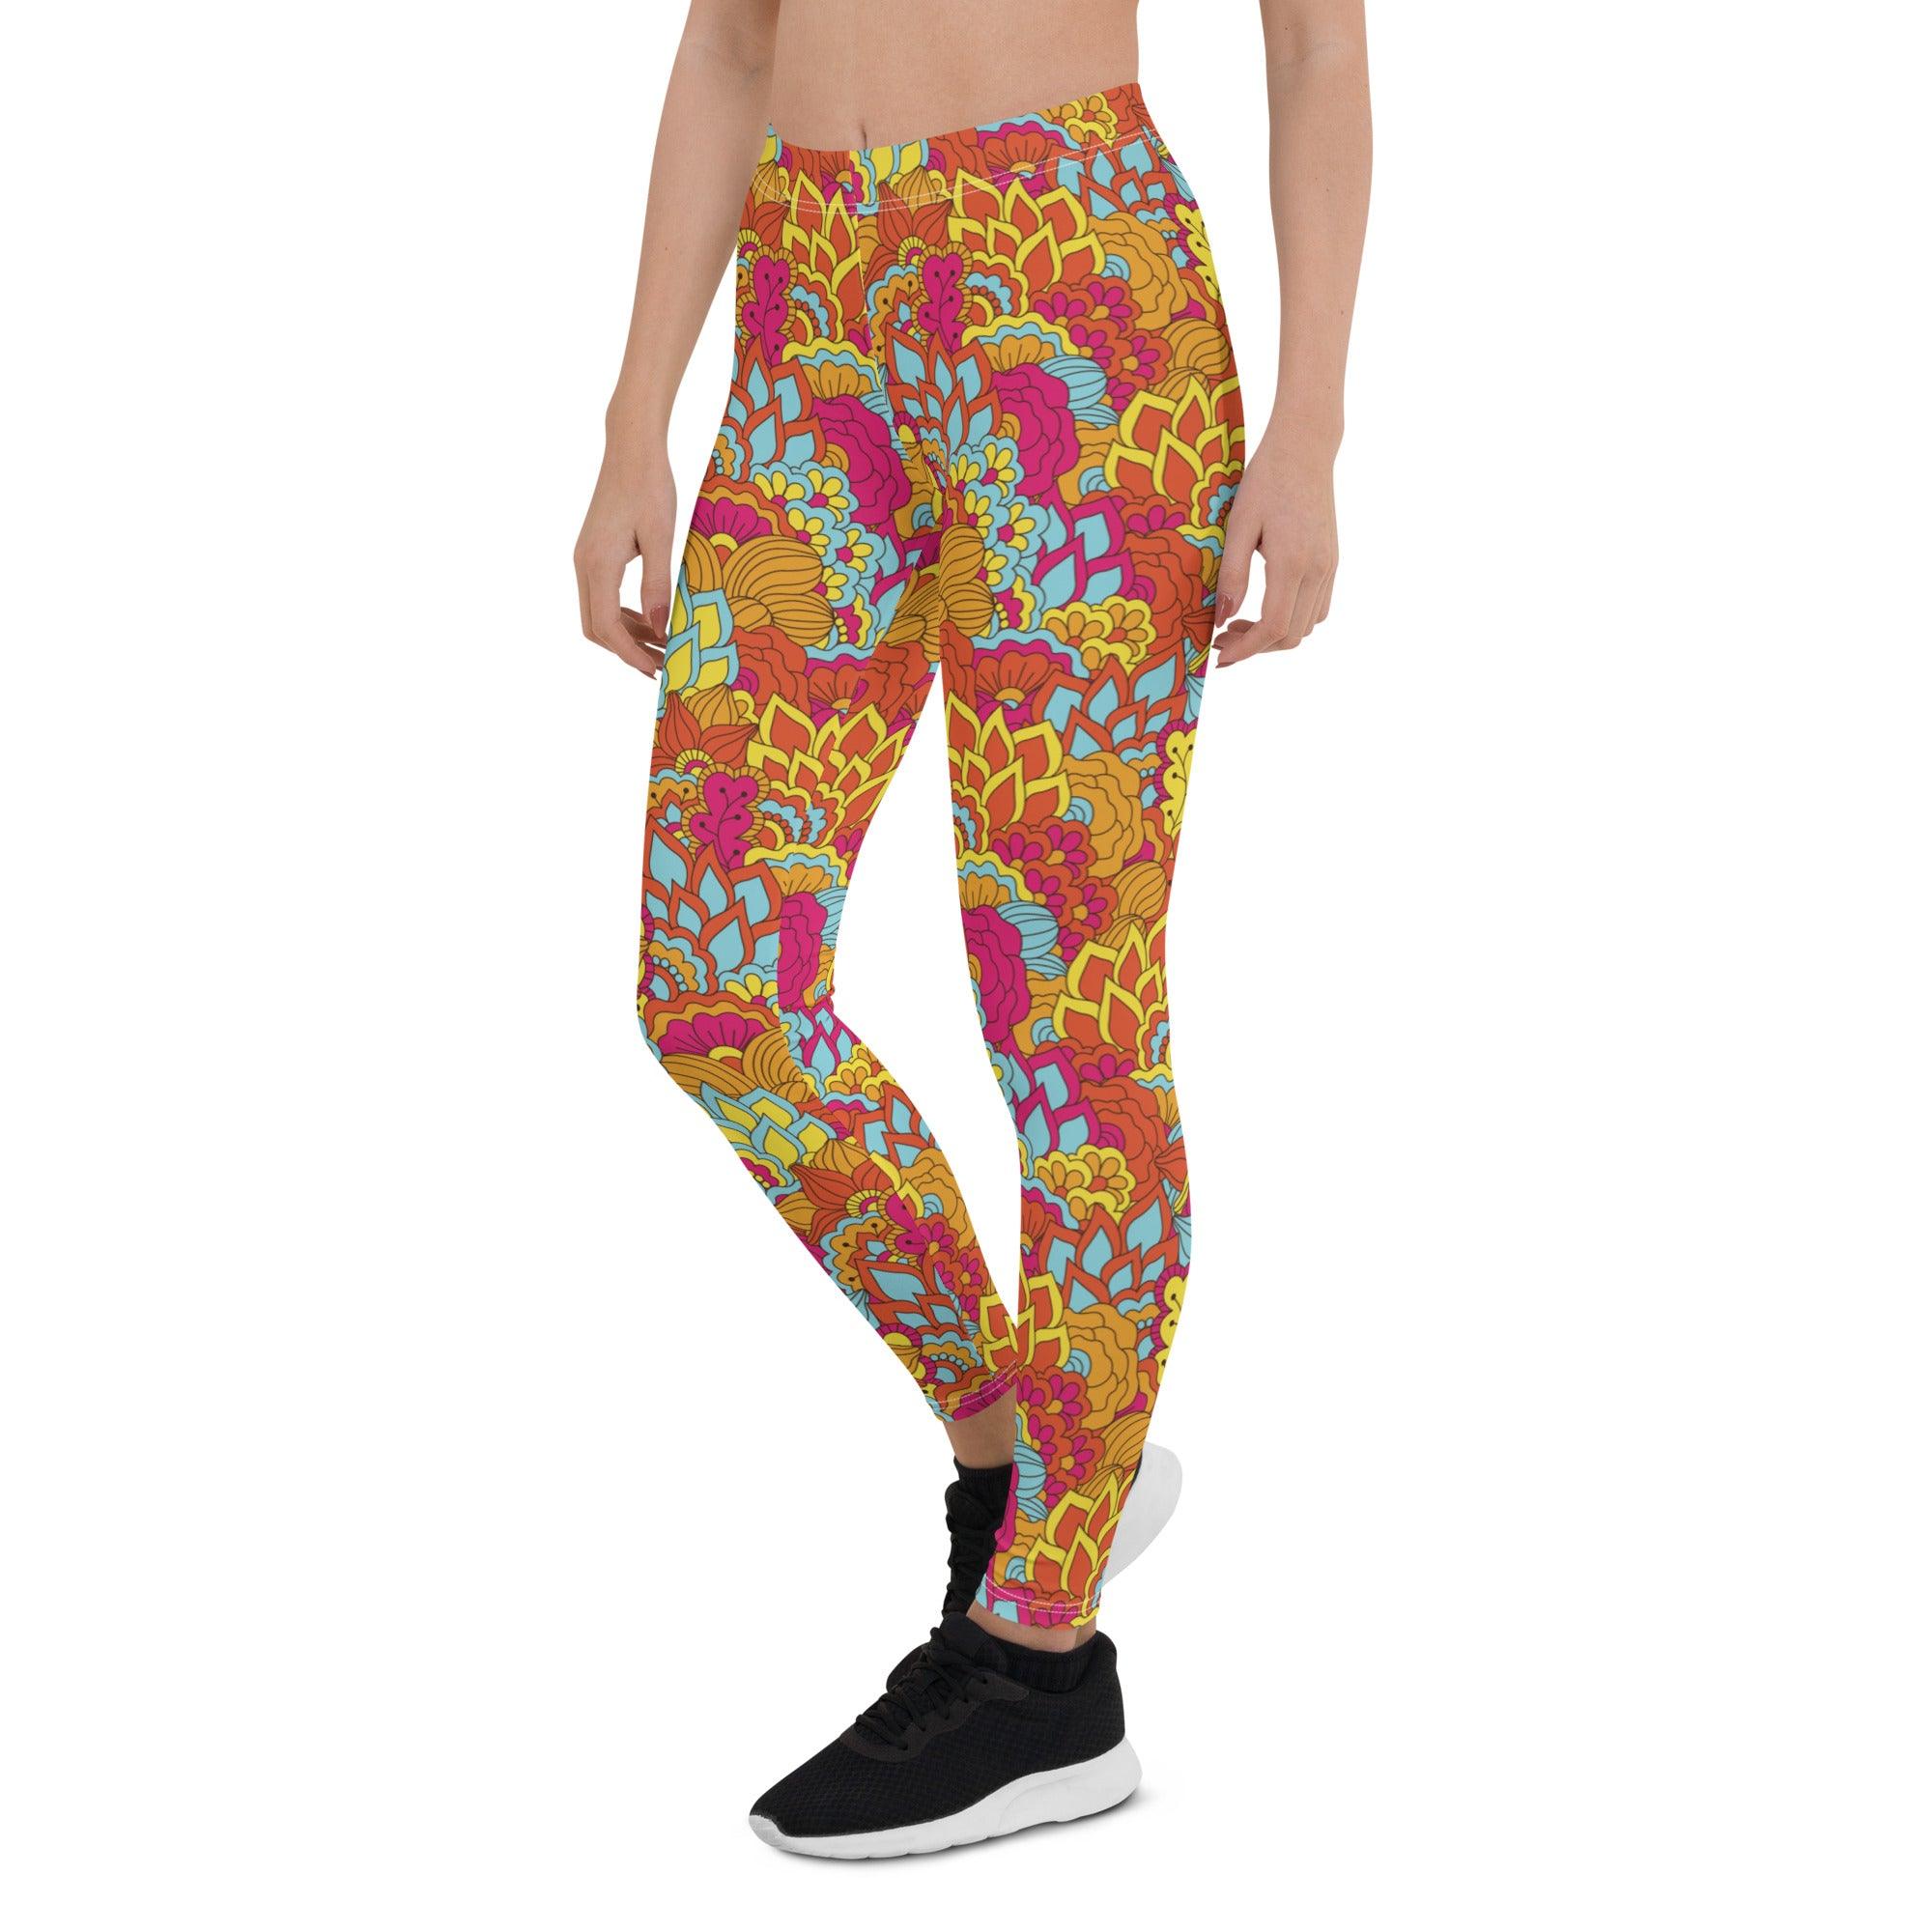 Inela Mid-Rise Leggings - Vibrant Flower Power Floral Print Retro Bold Funky Multicolor Women's Activewear Active Bottom